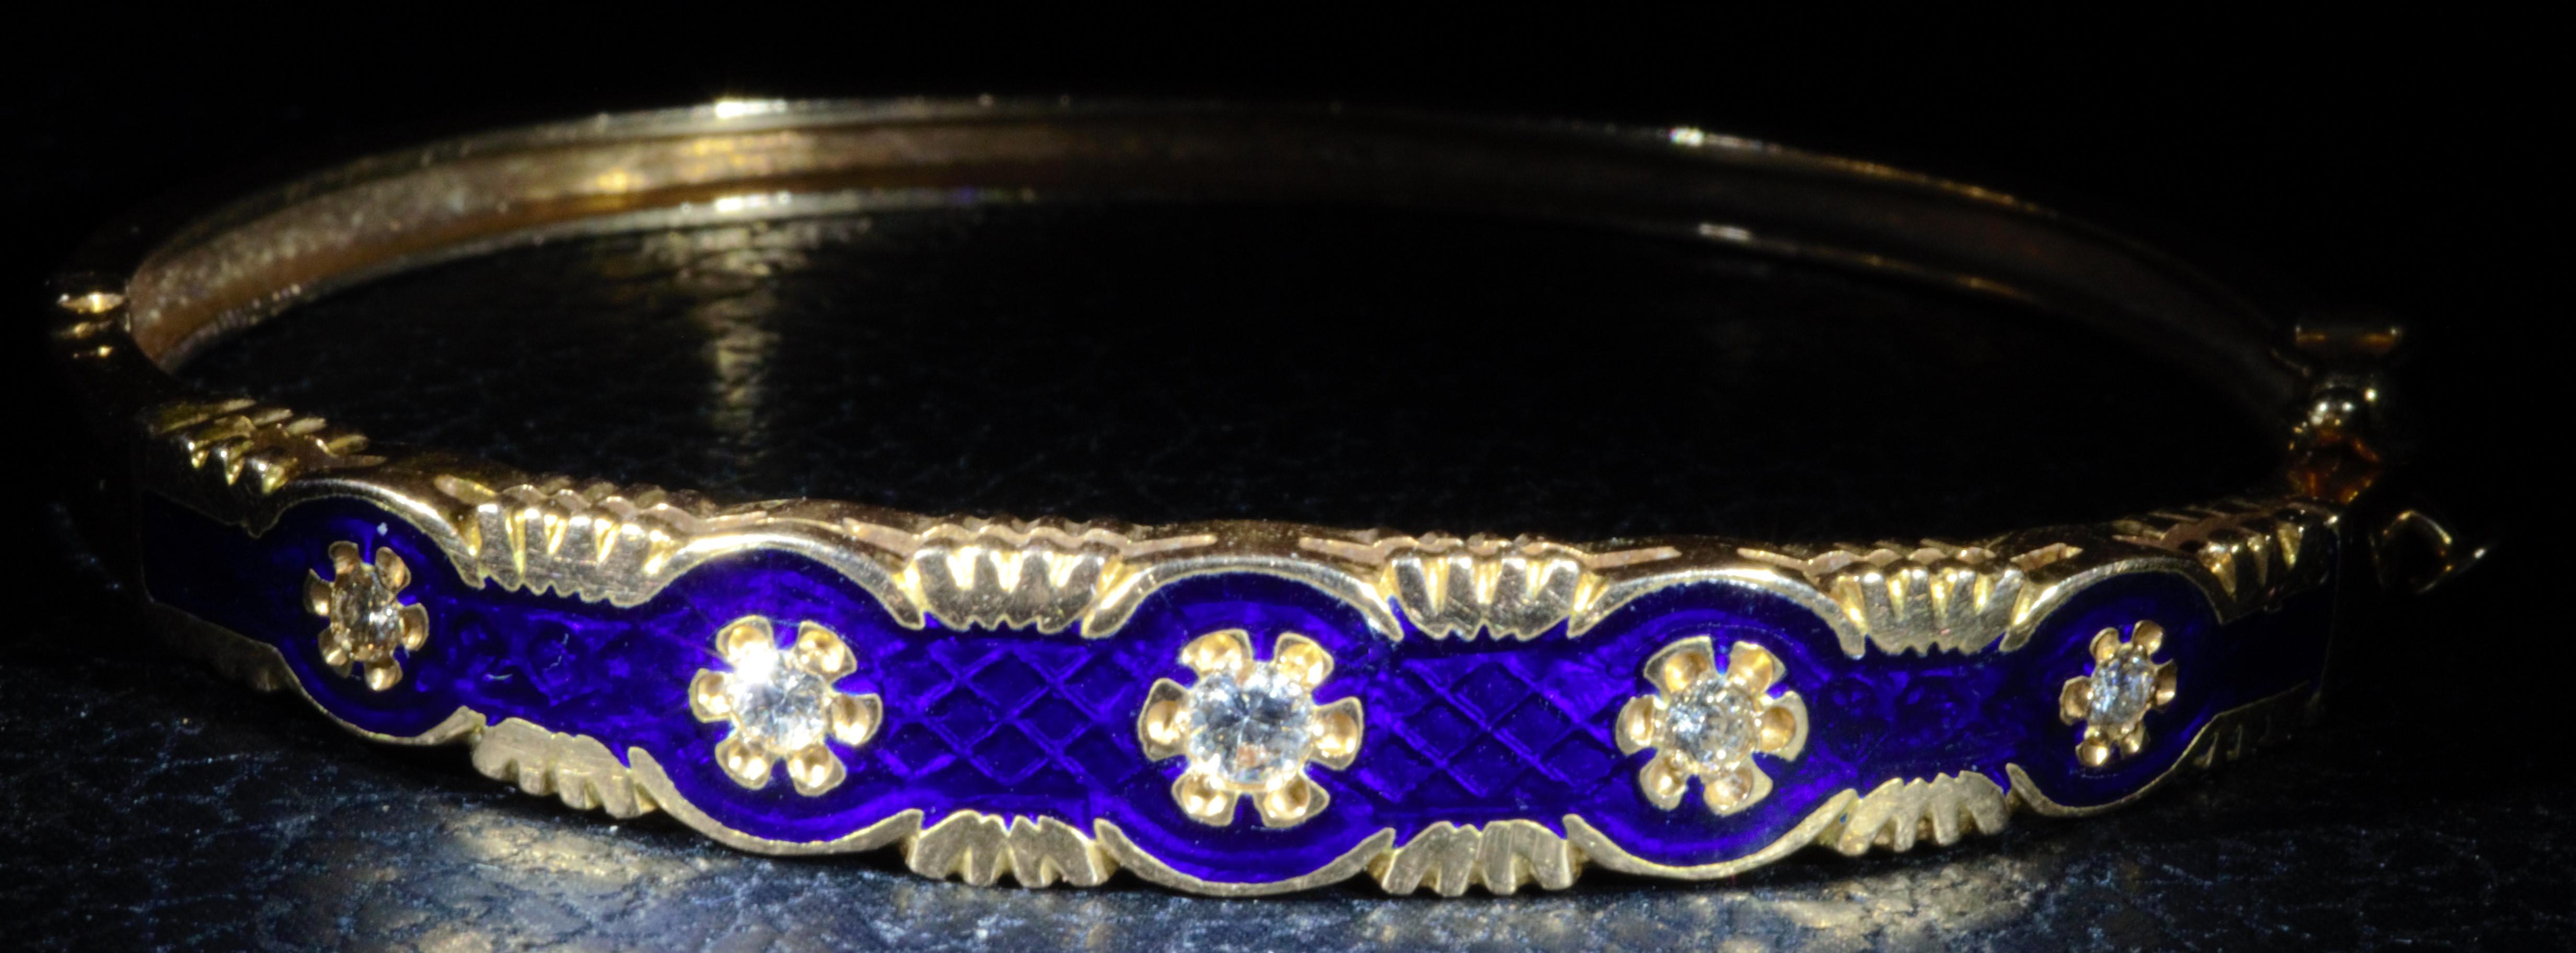 Victorian Style Midnight Blue Enamel and Diamond Bangle Bracelet .20ctw in diamonds.  Beautiful midnight blue enamel.  Classic bracelet